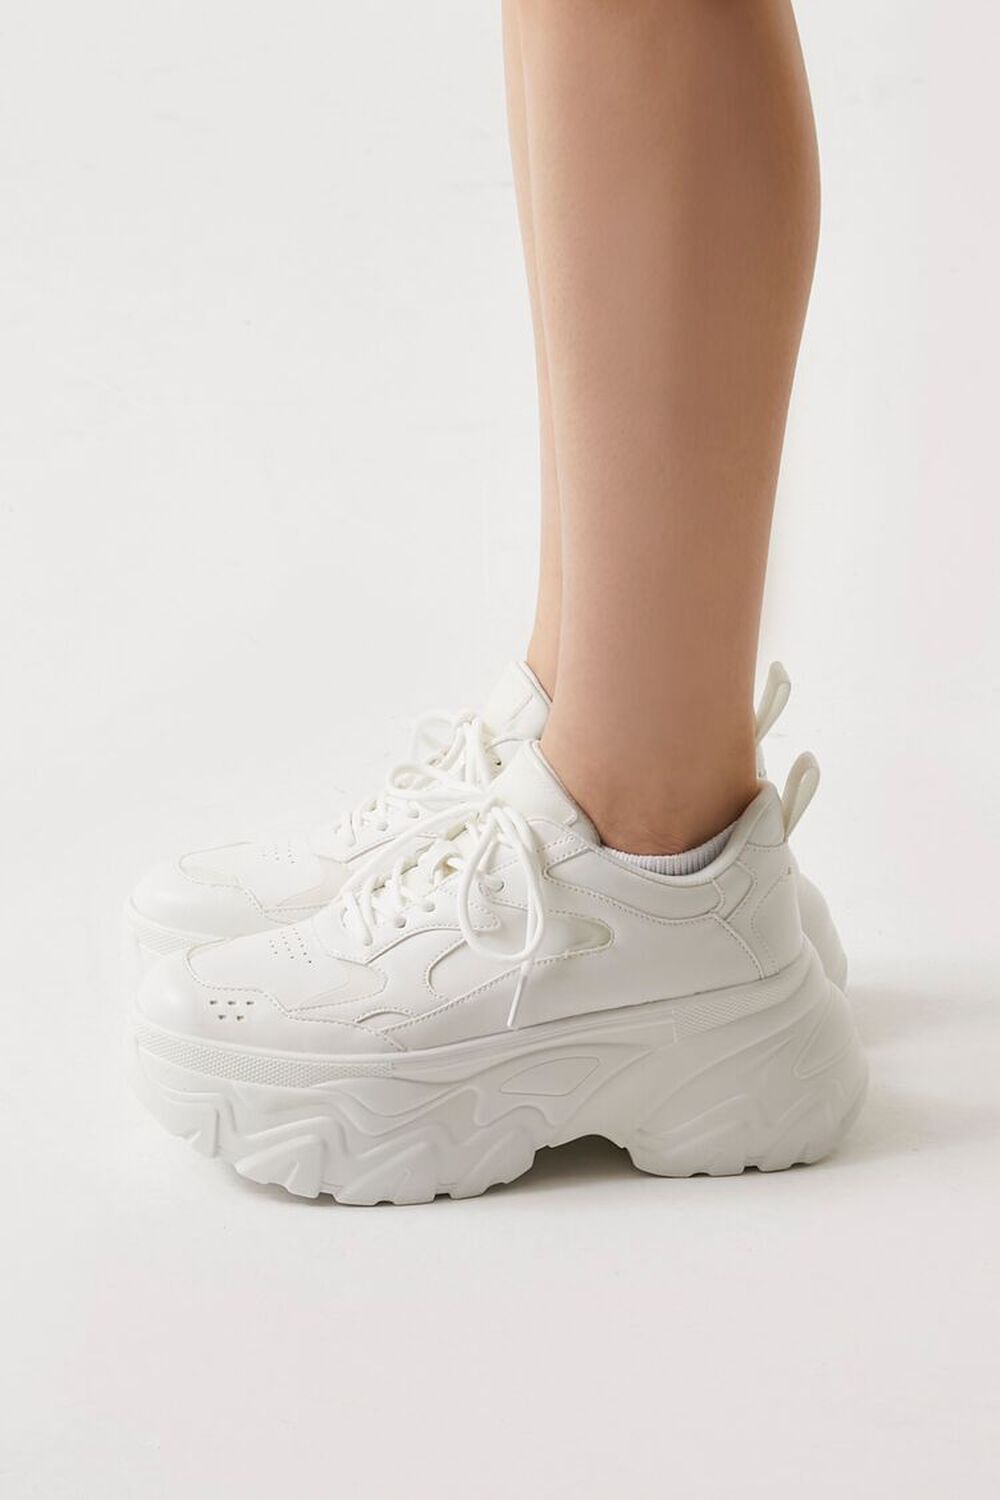 WHITE Chunky Platform Sneakers, image 2